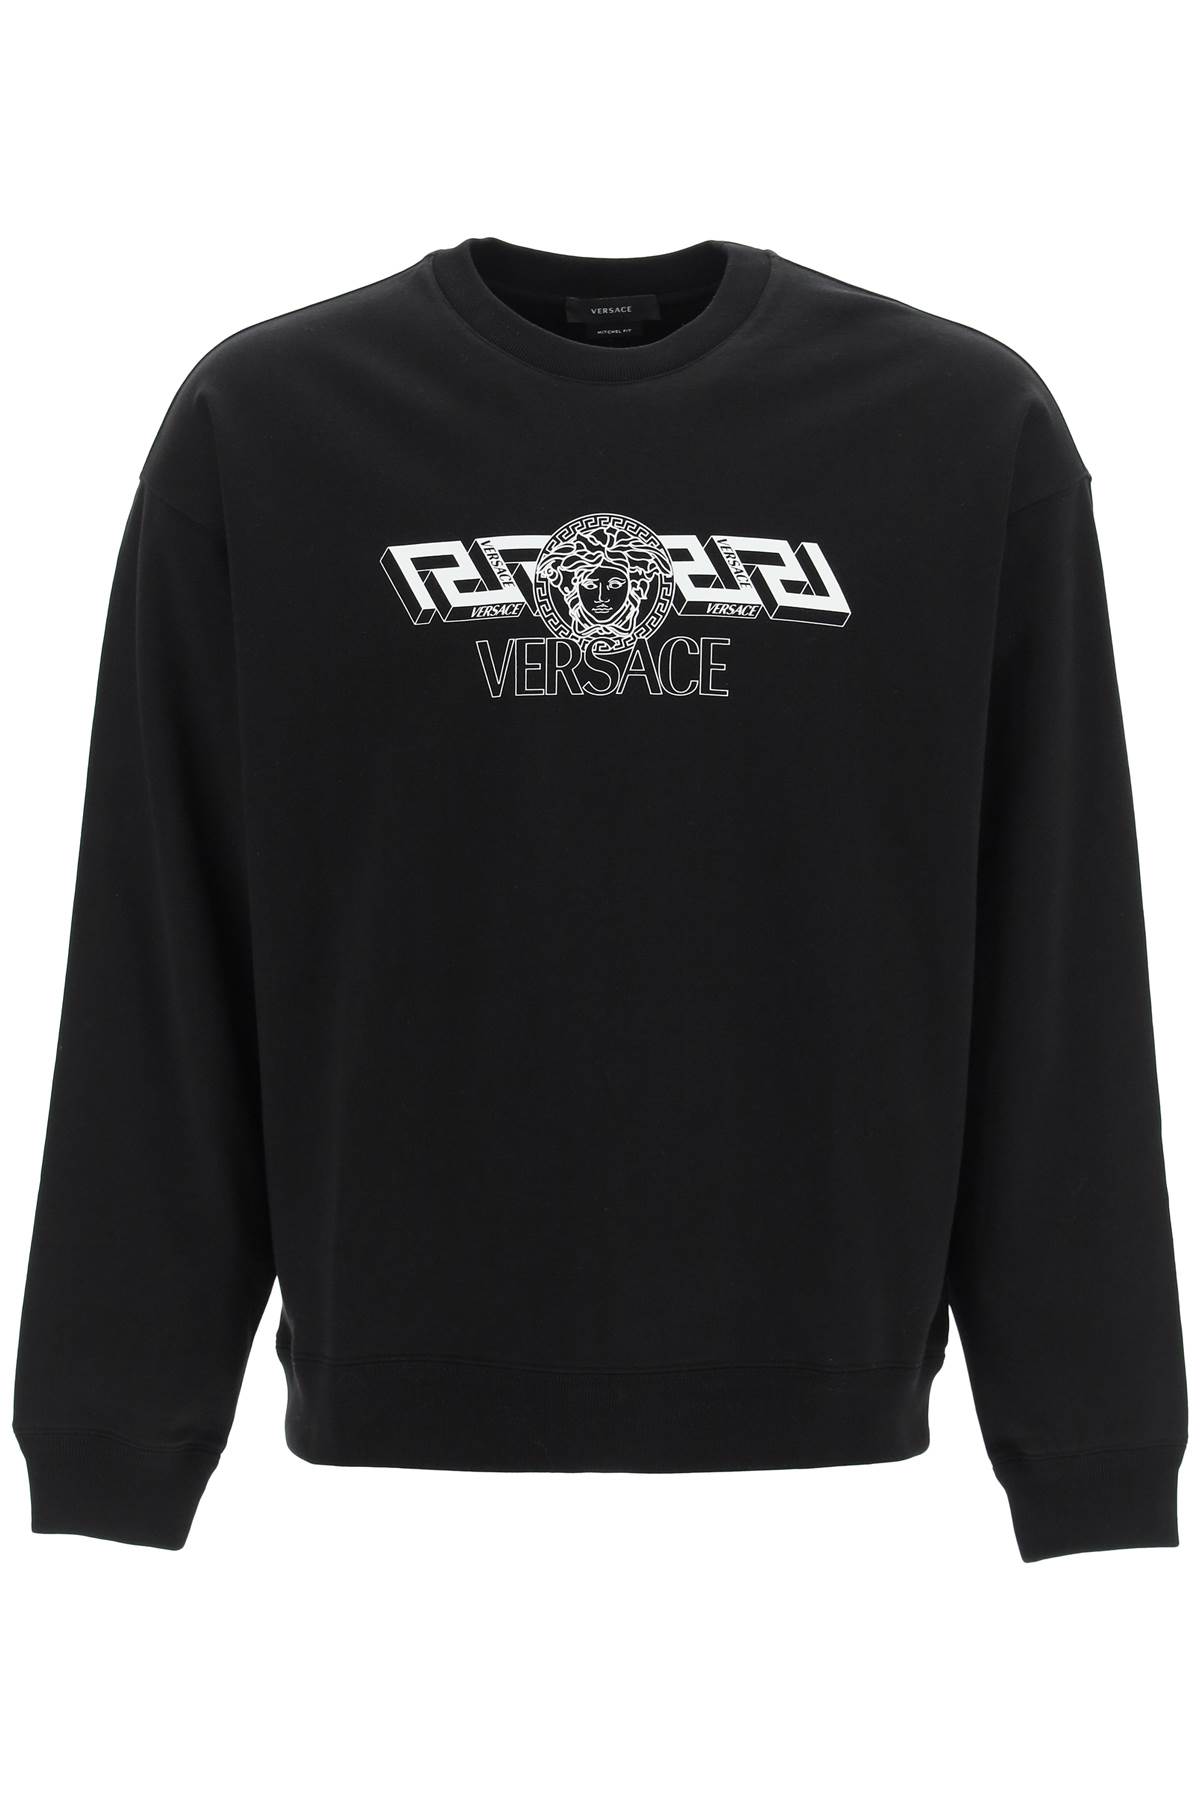 Versace La Greca Sweatshirt